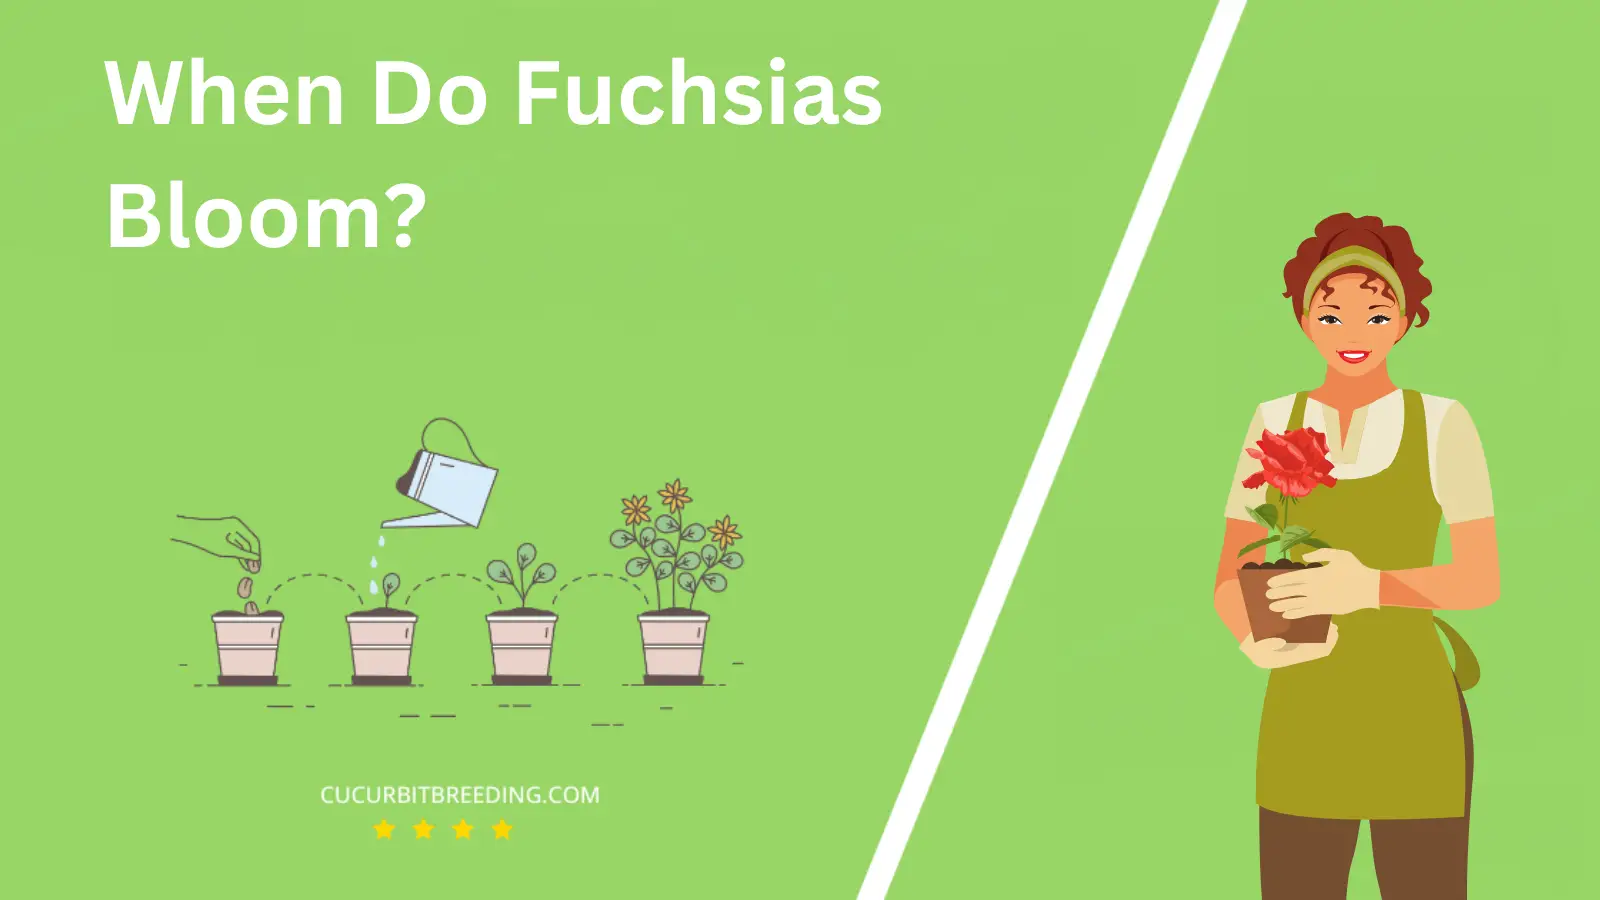 When Do Fuchsias Bloom?